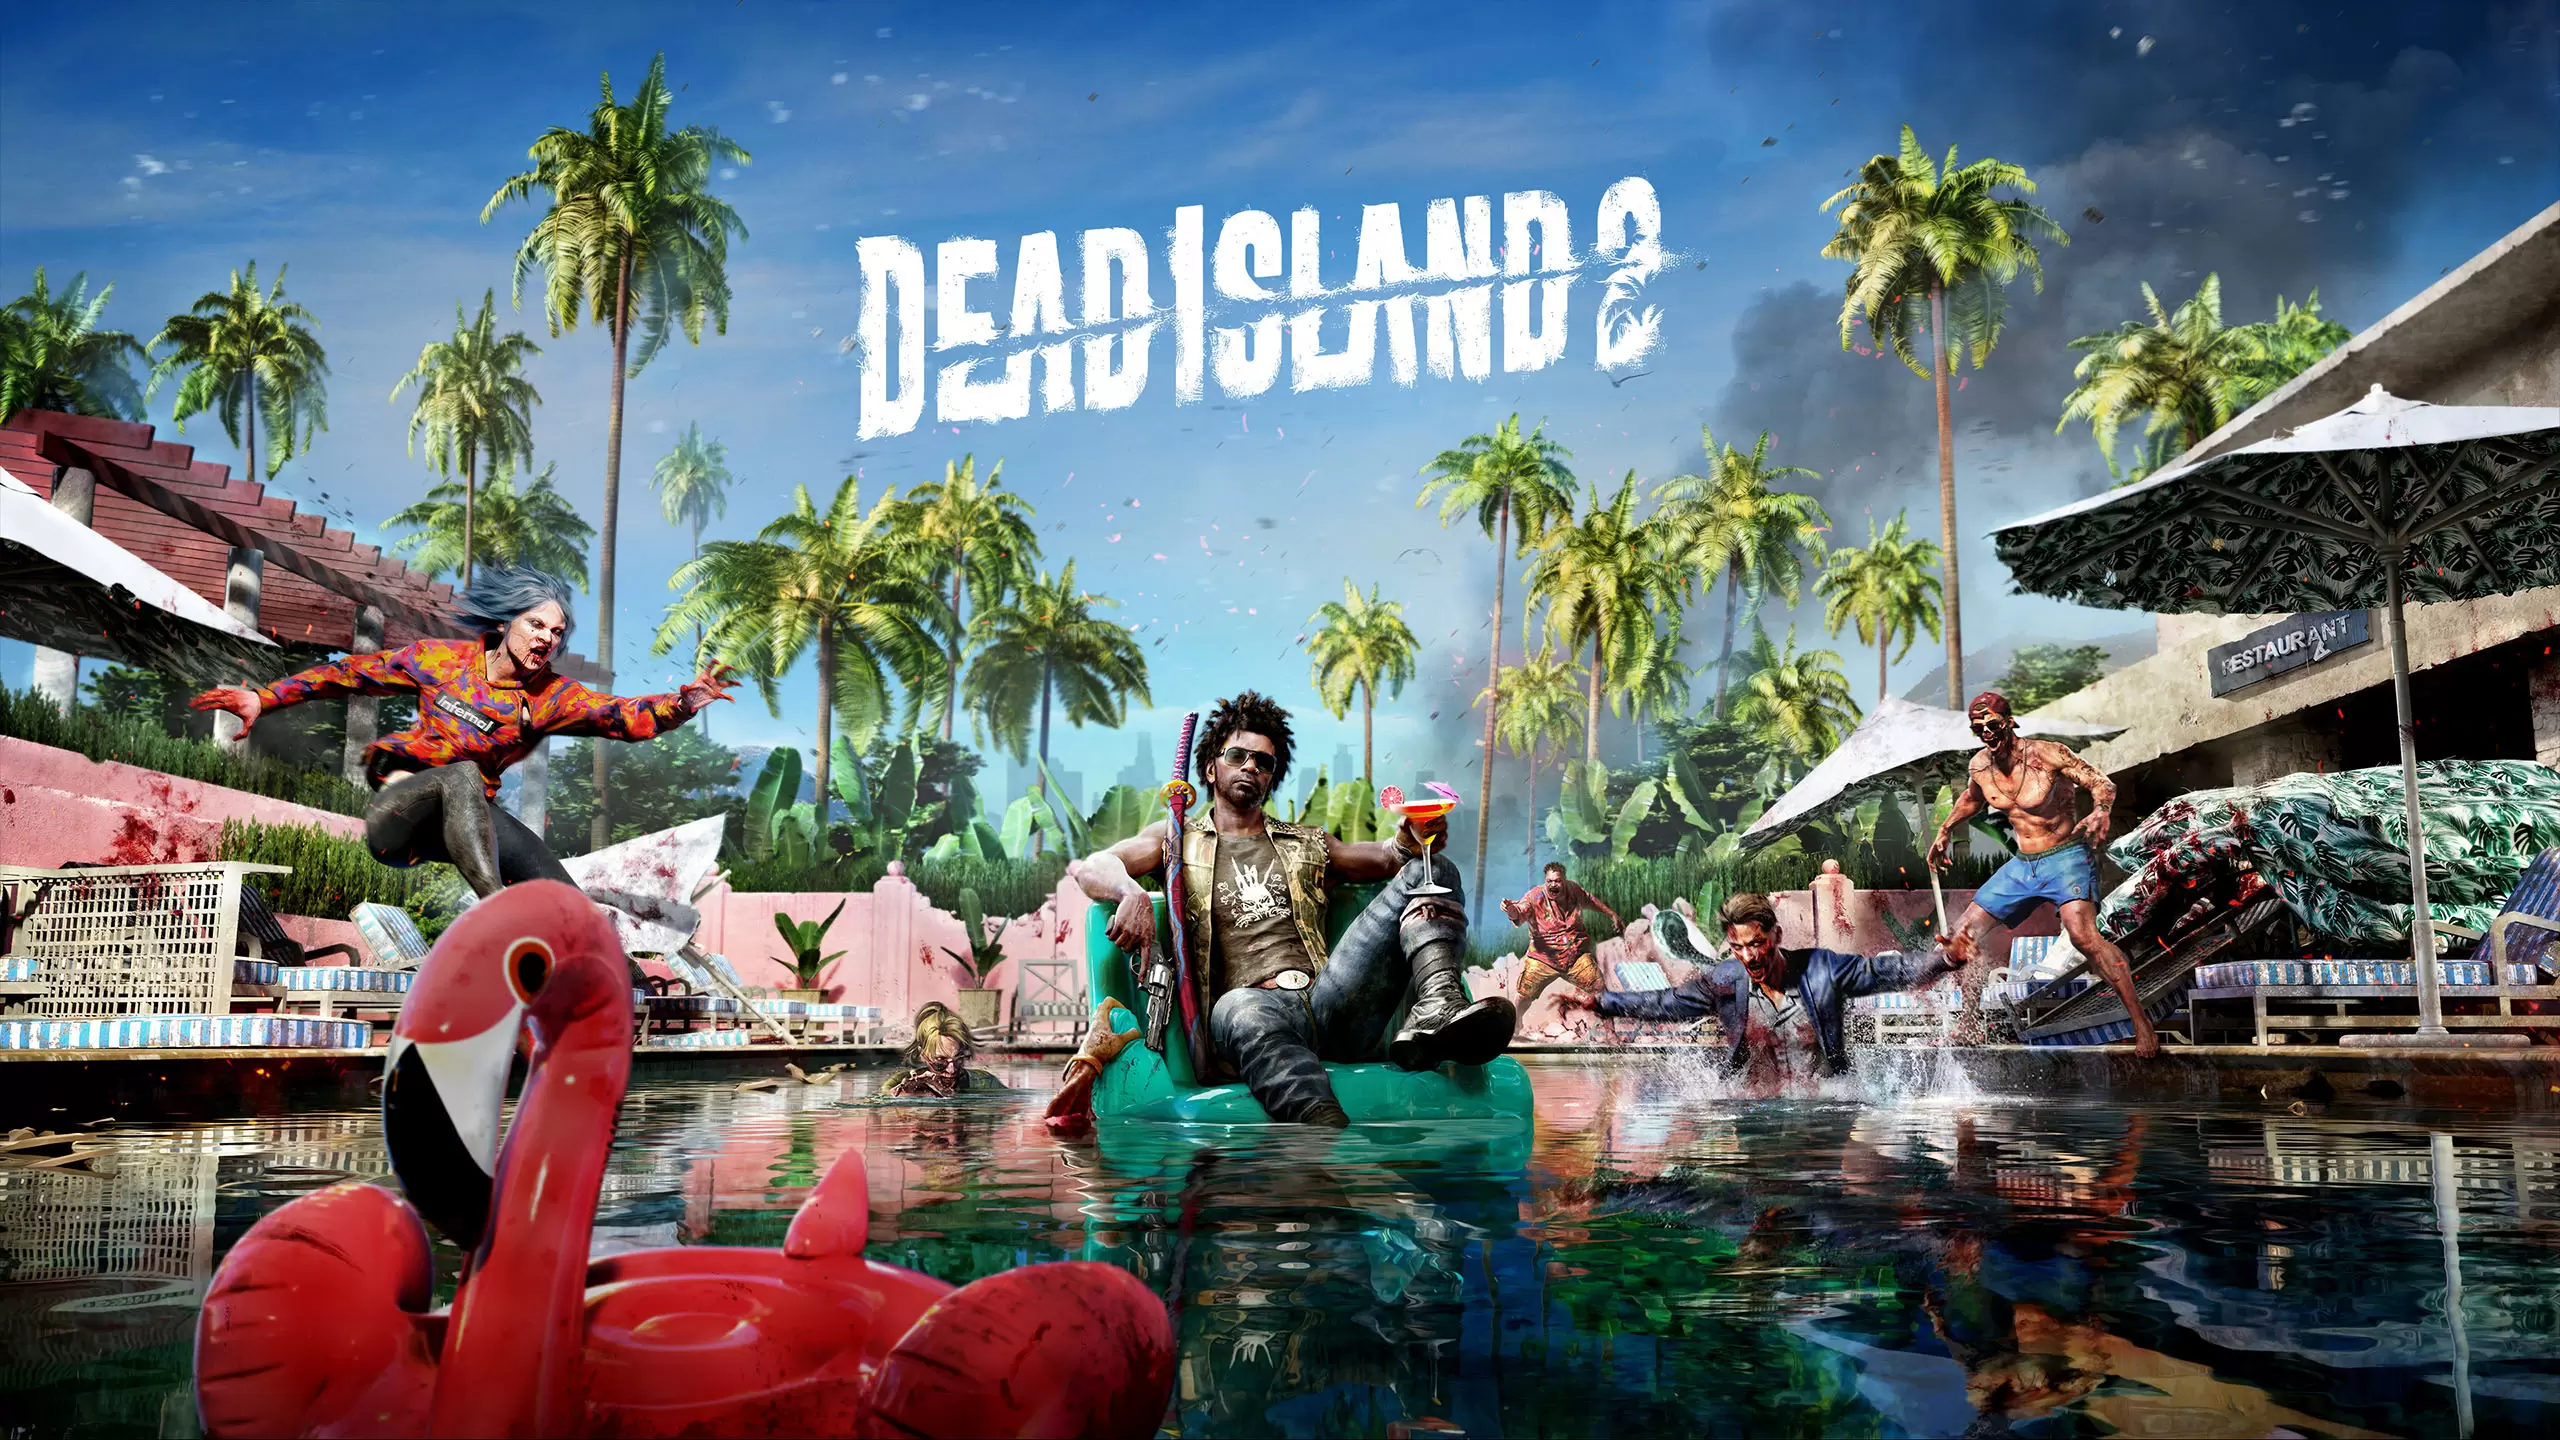 Dead island 2 cracked Status